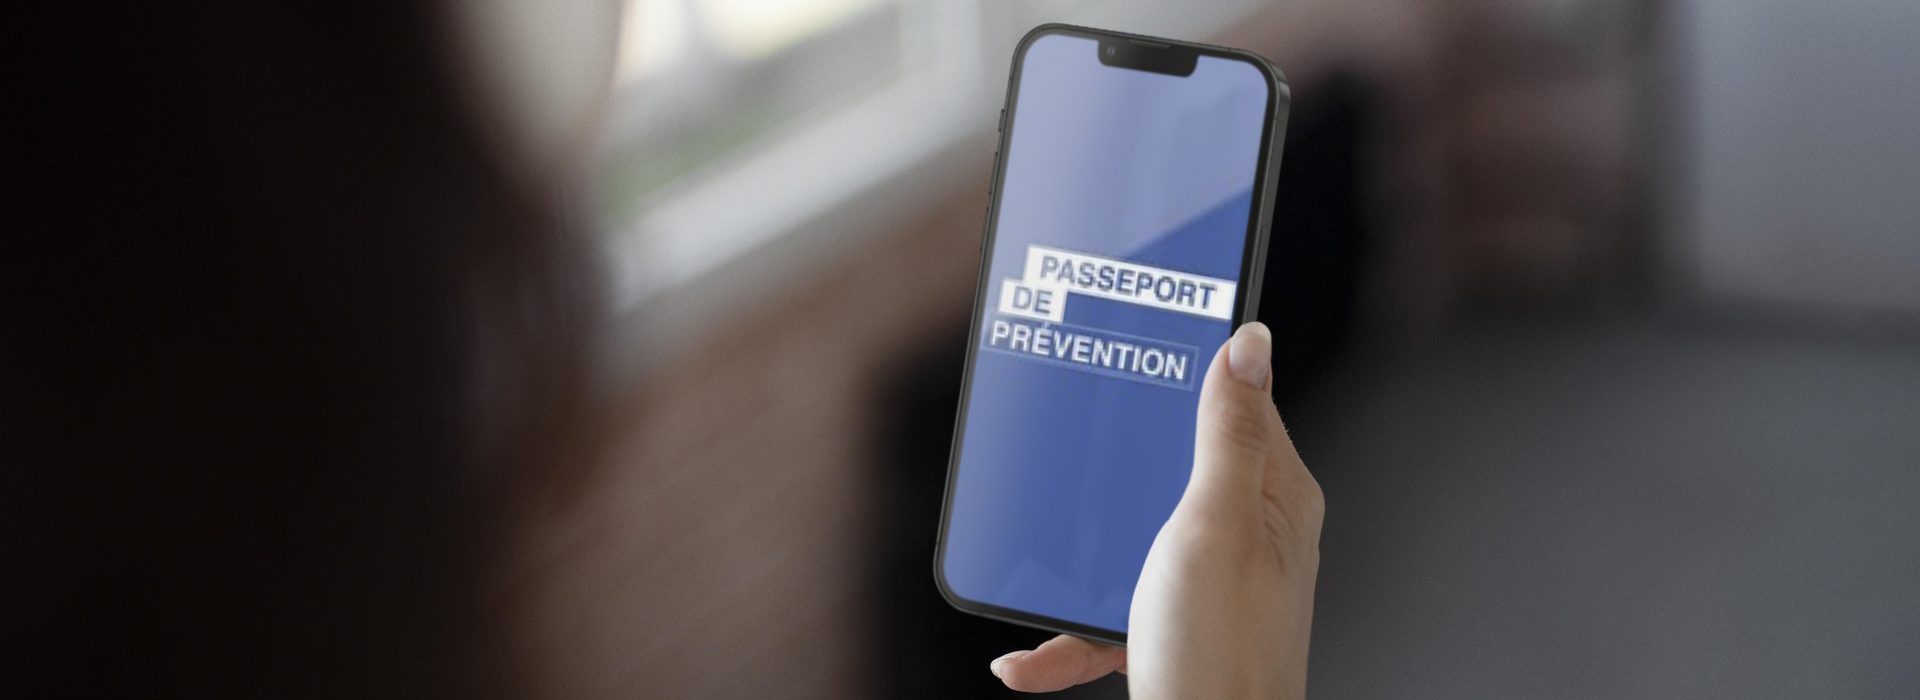 Passeport_de_prevention_performance_RH